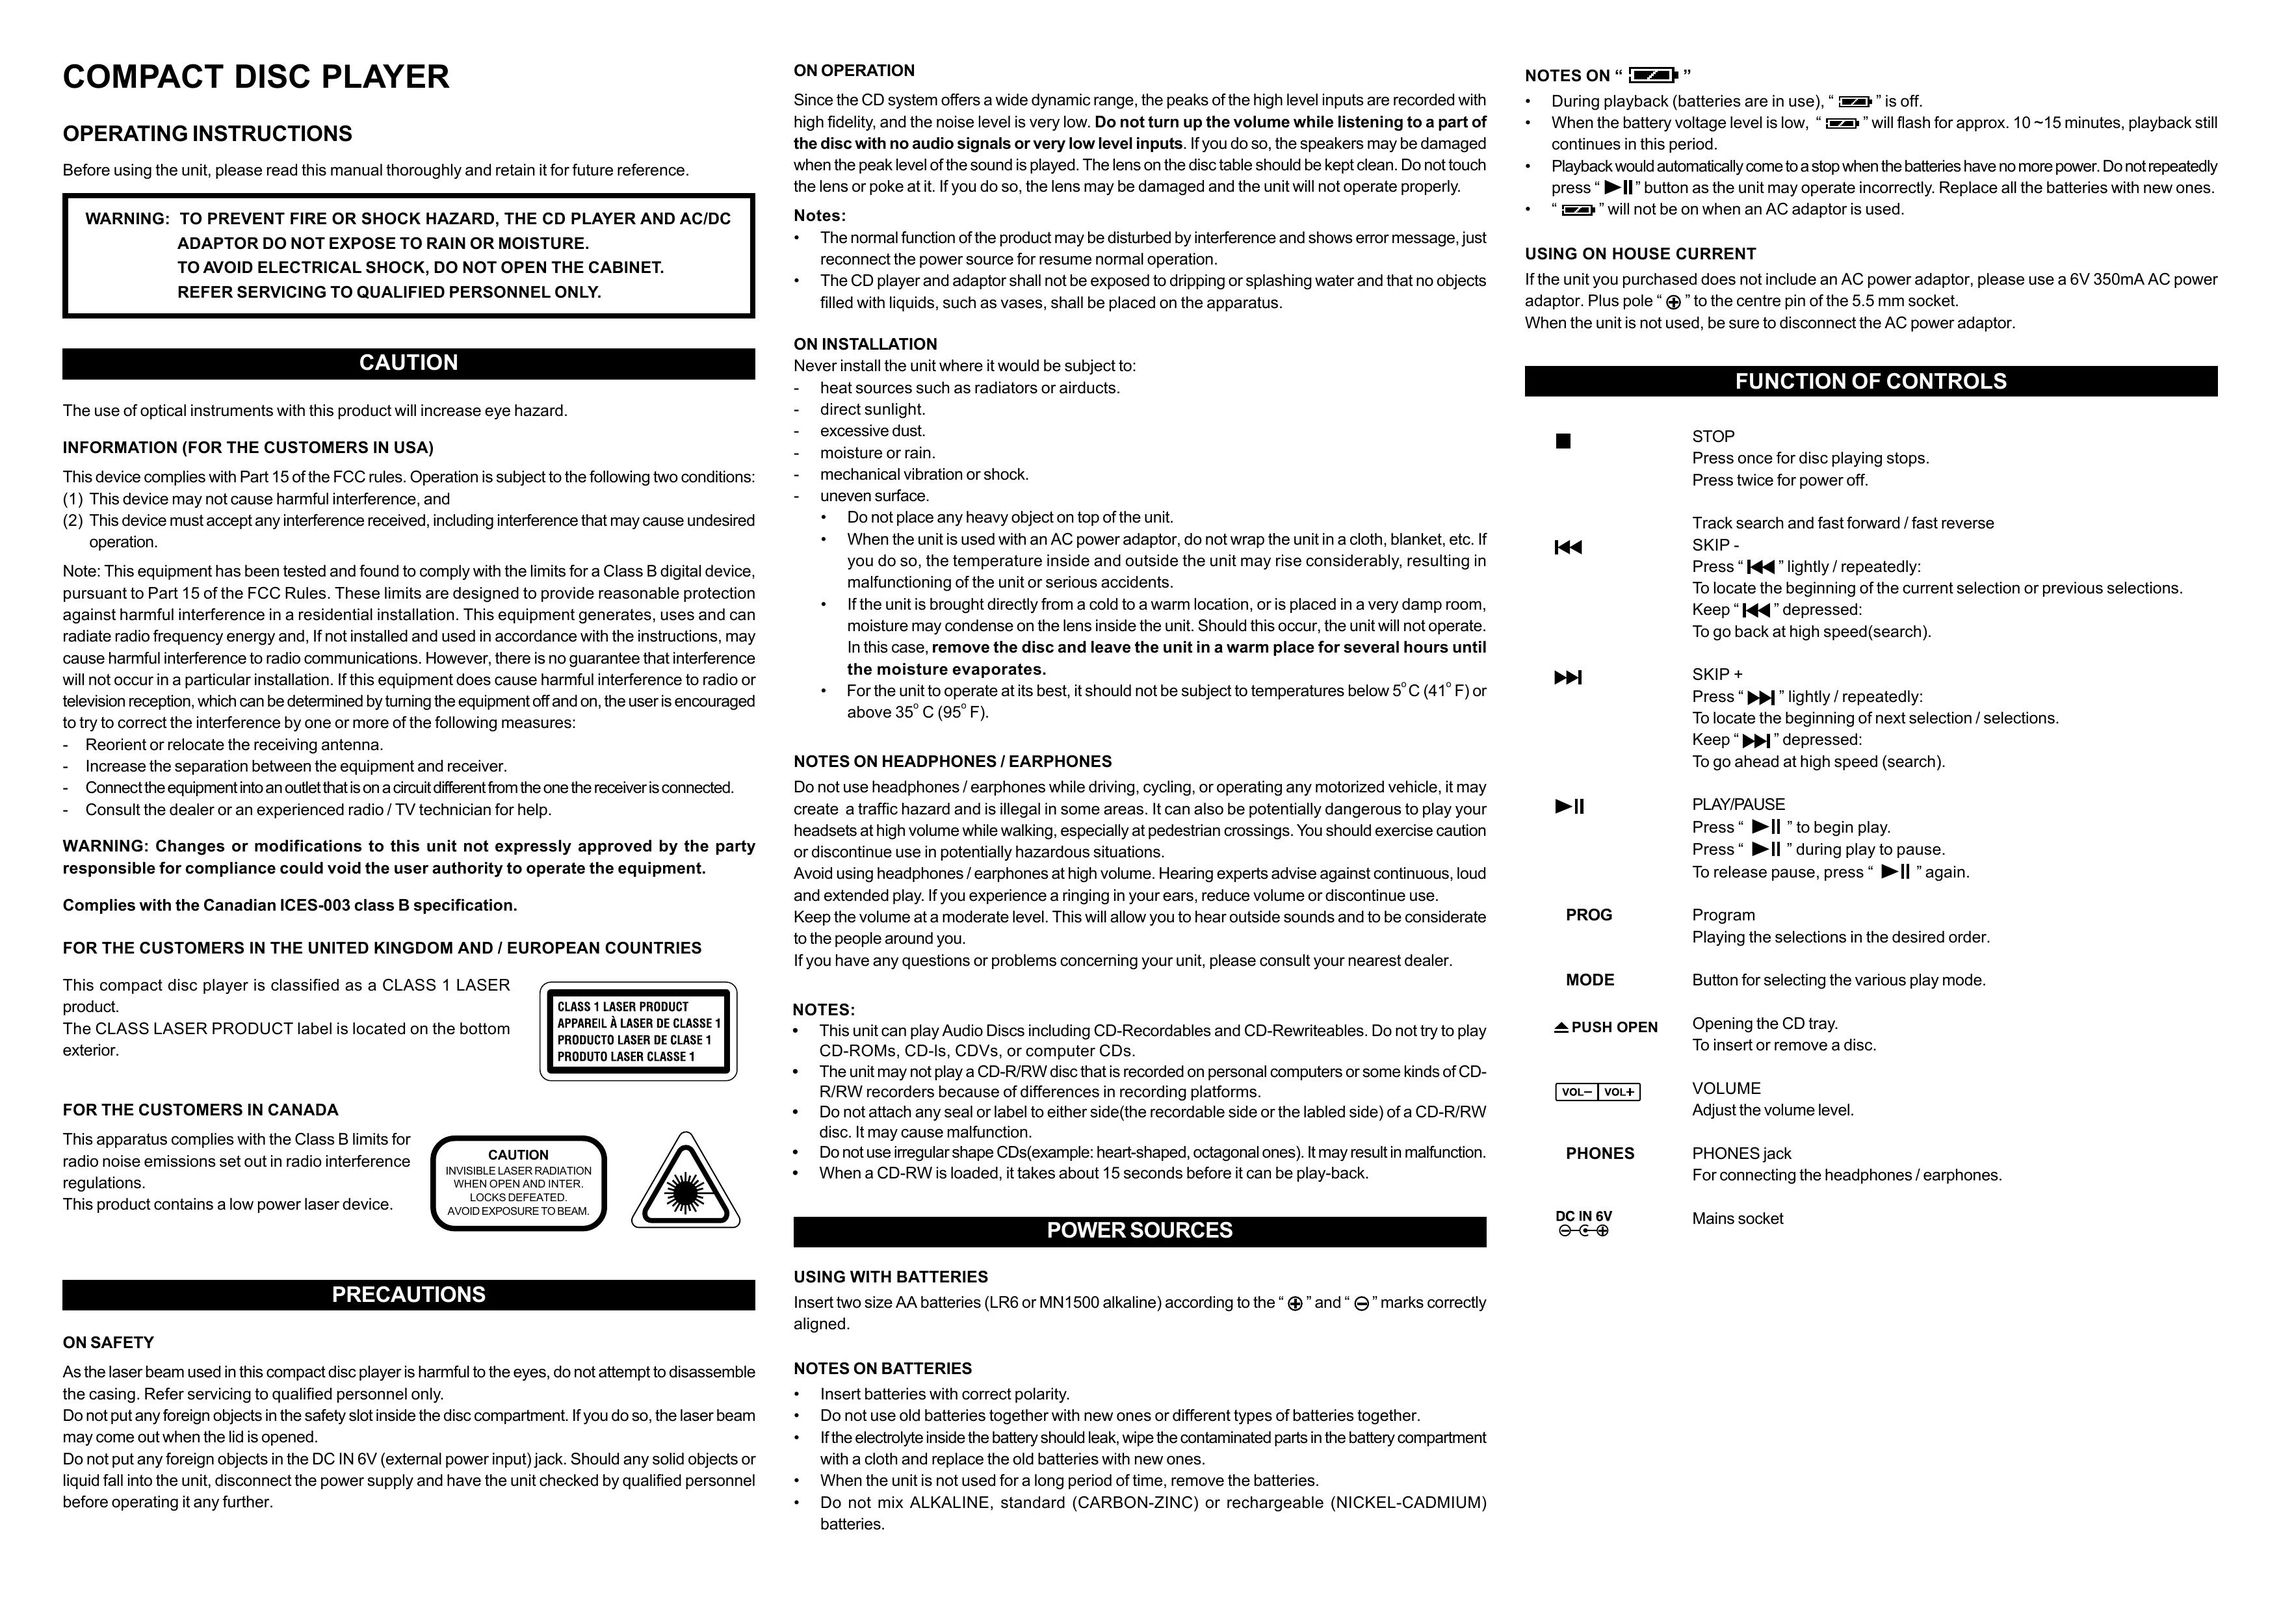 Audiovox DM8000-60 CD Player User Manual